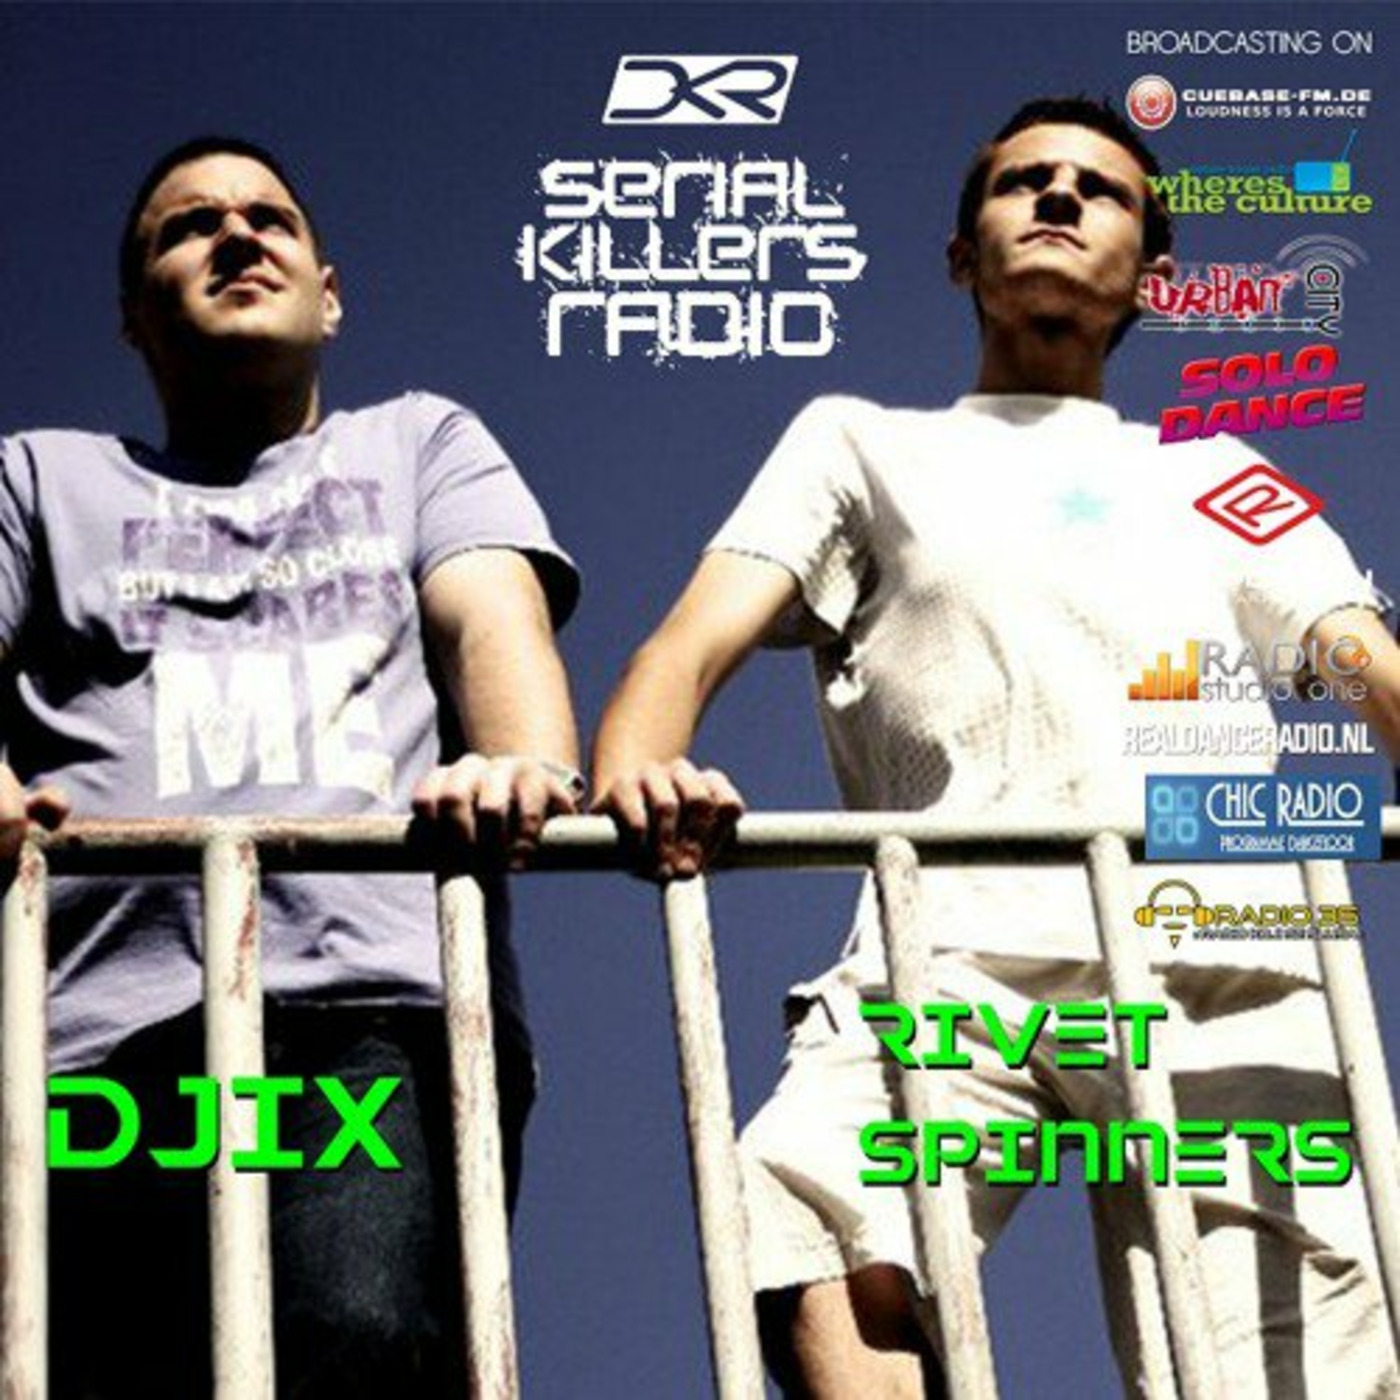 DKR Serial Killers 111 (DJIX & Rivet Spinners)